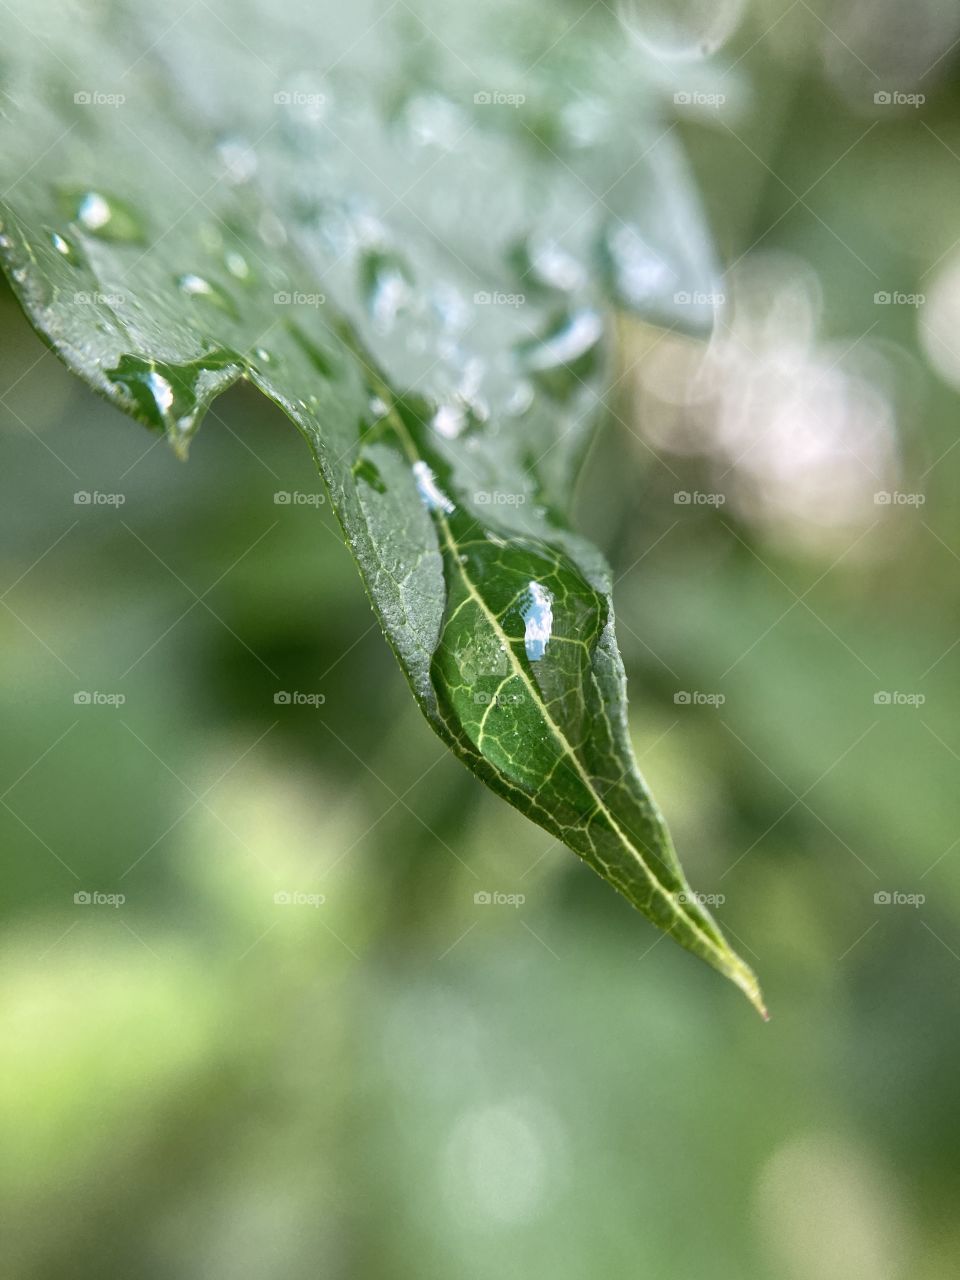 
a drop of rain on a leaf